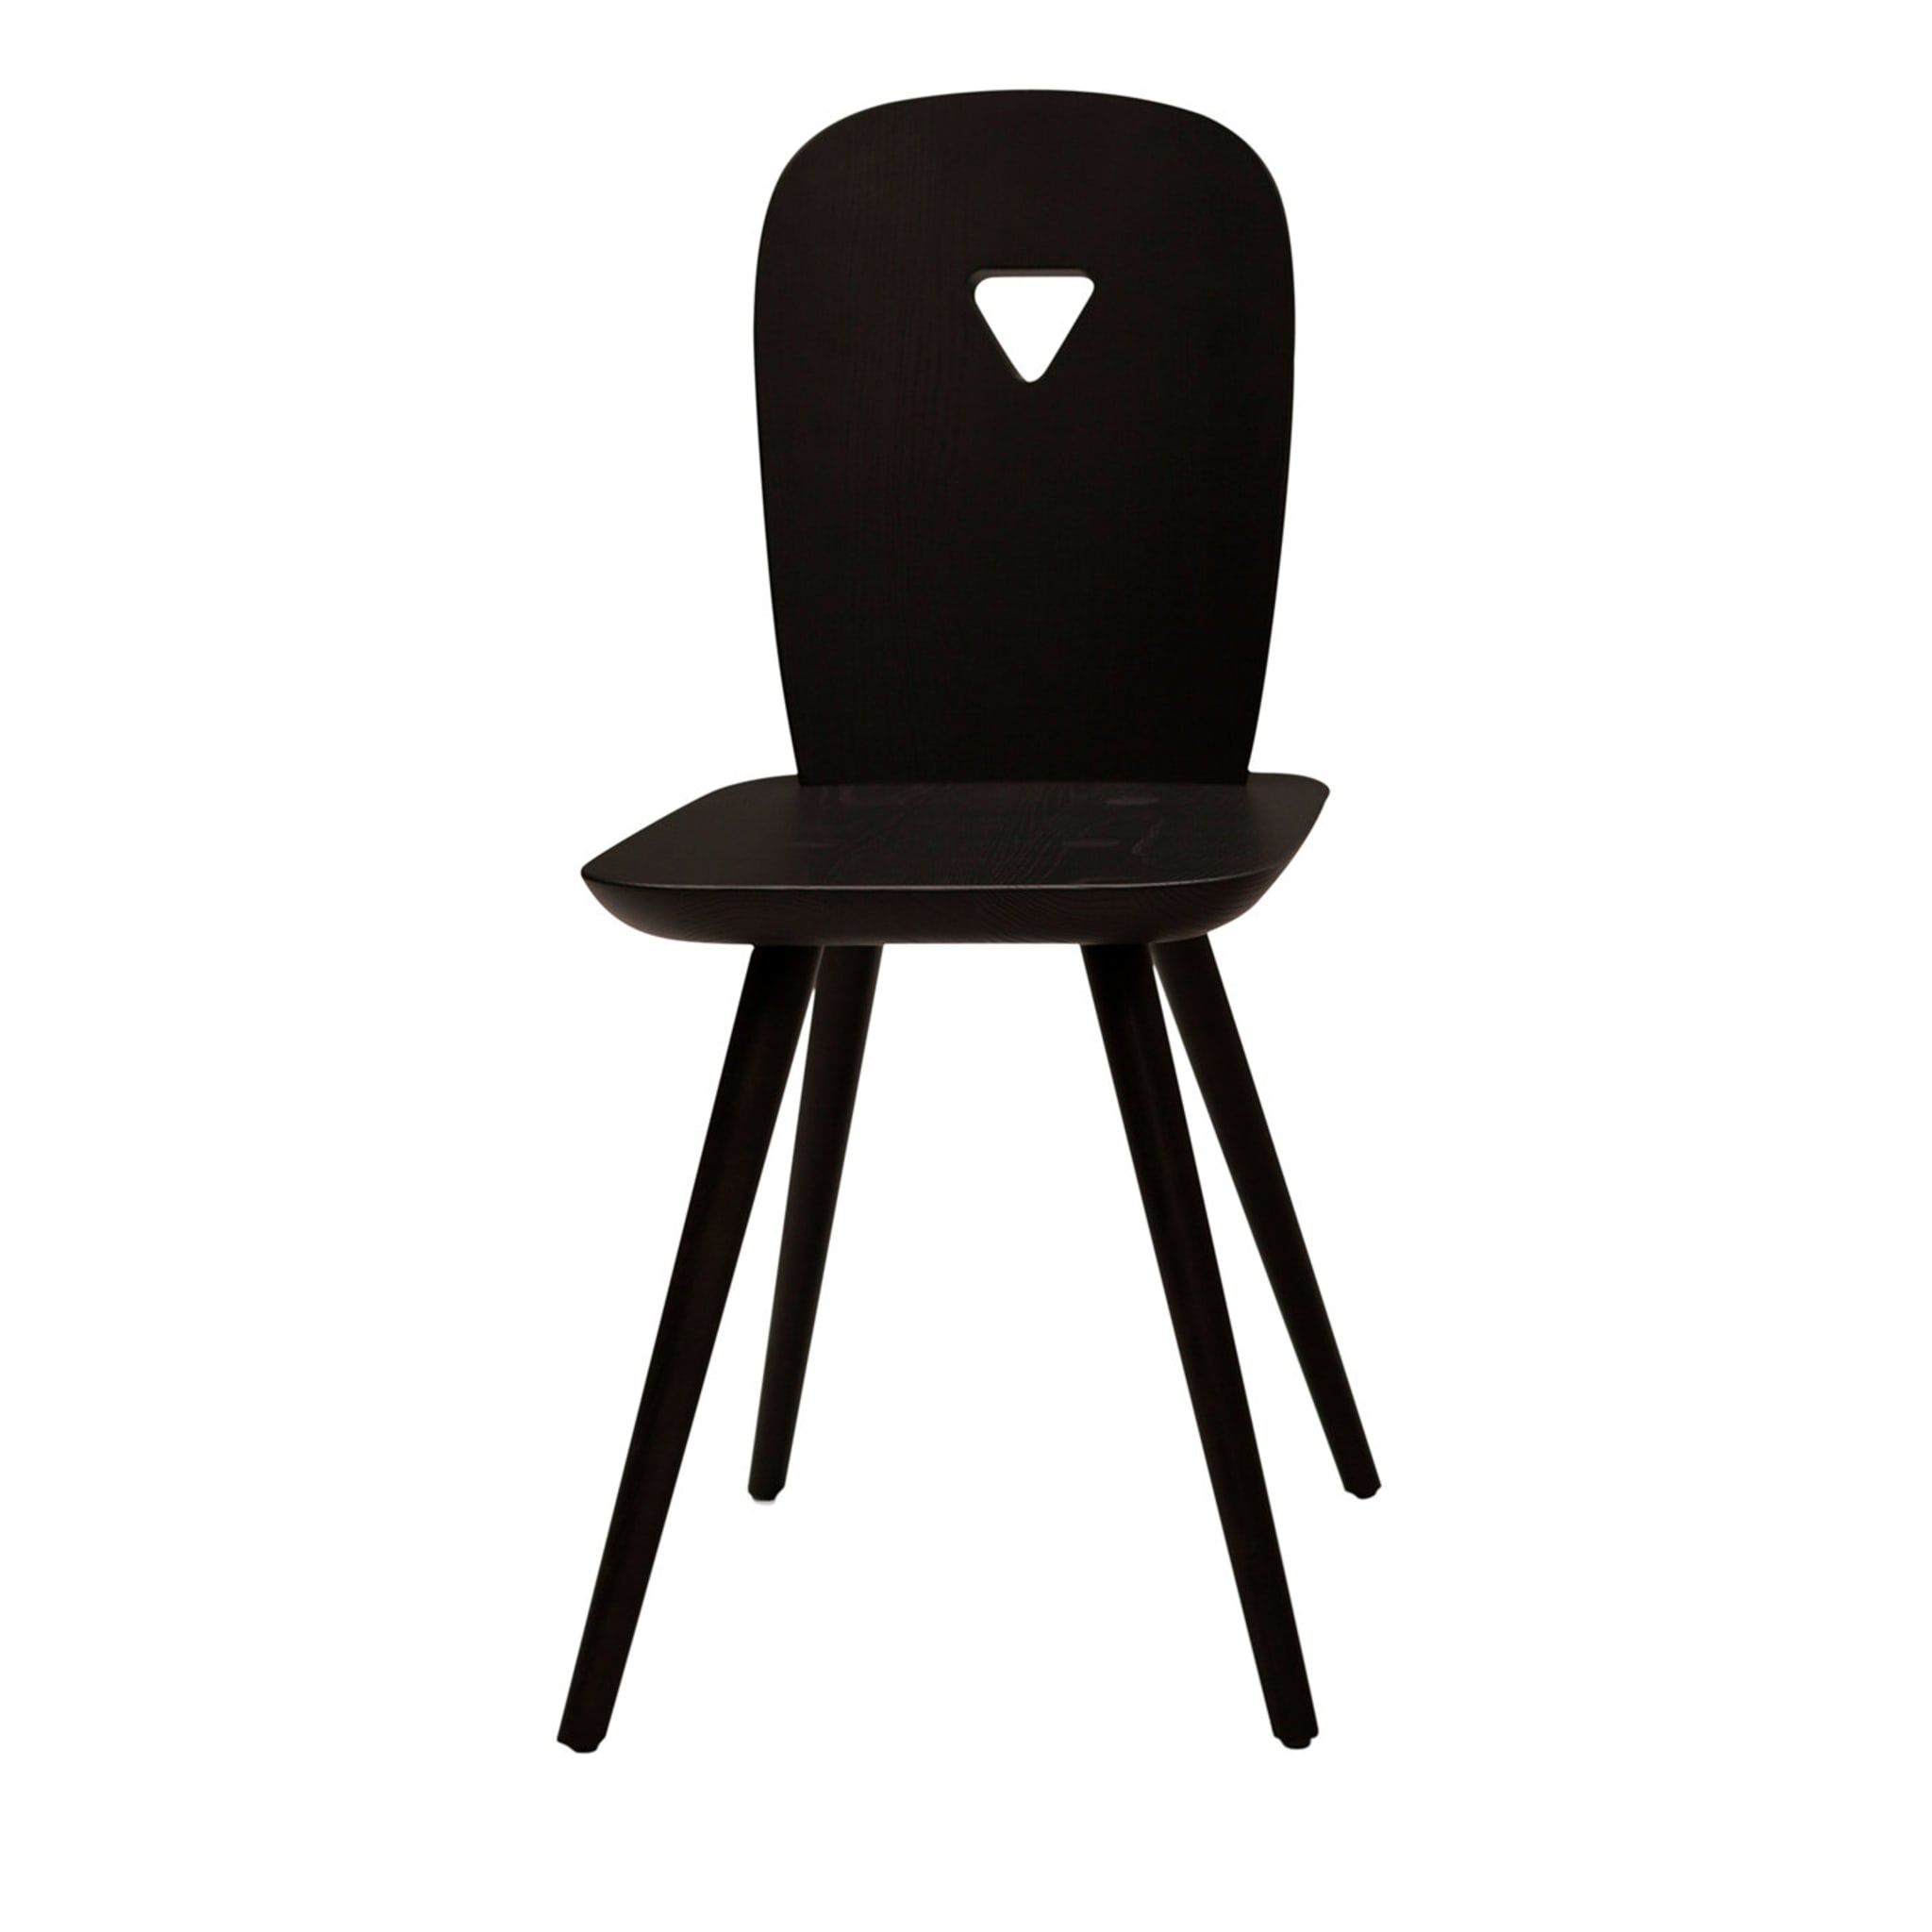 La-Dina Set of 2 Black Chairs by Luca Nichetto - Main view